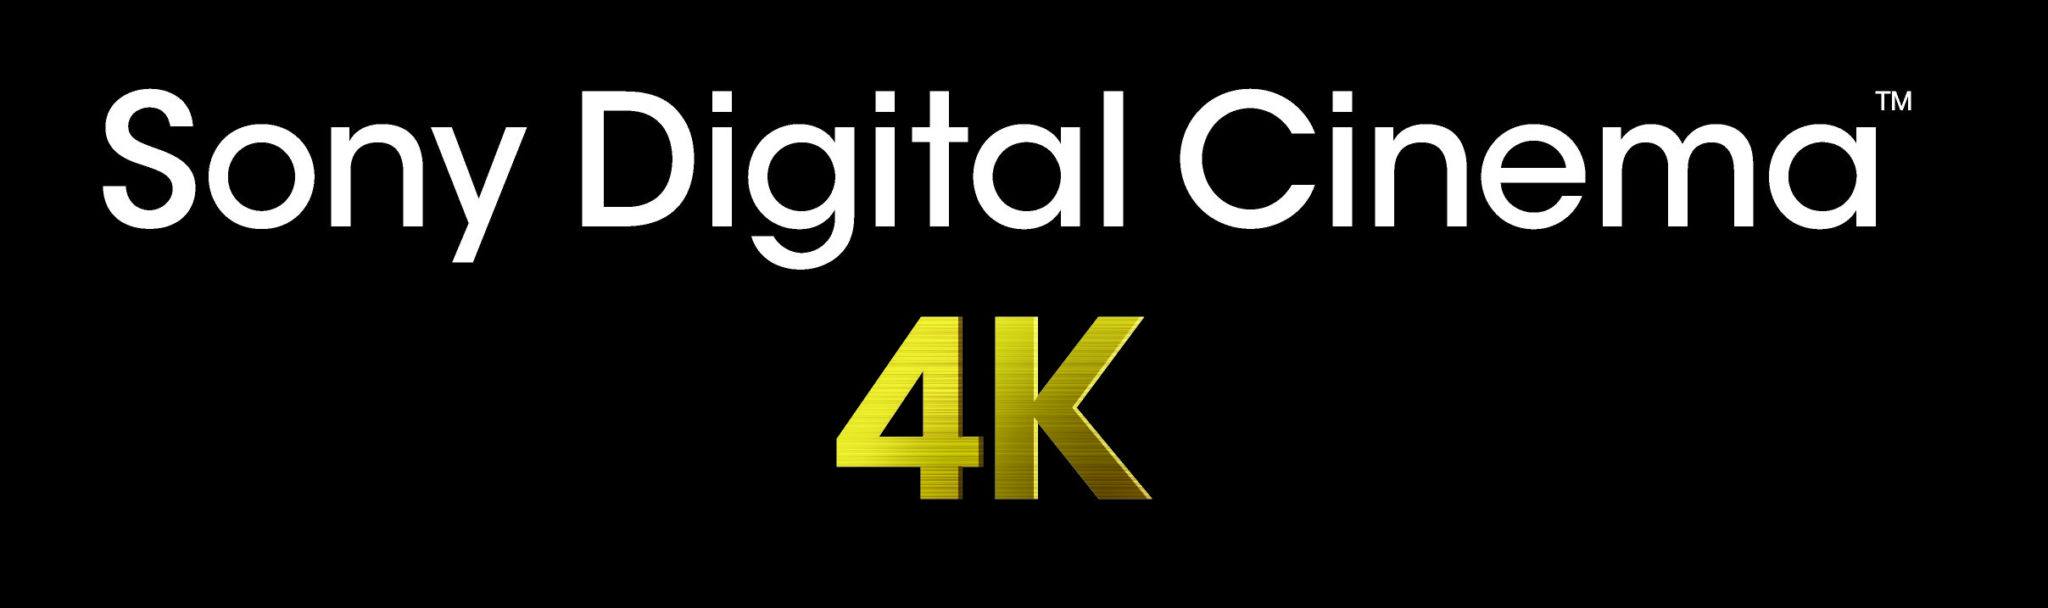 Sony Digital Cinema 4K Solutions: Europe and America